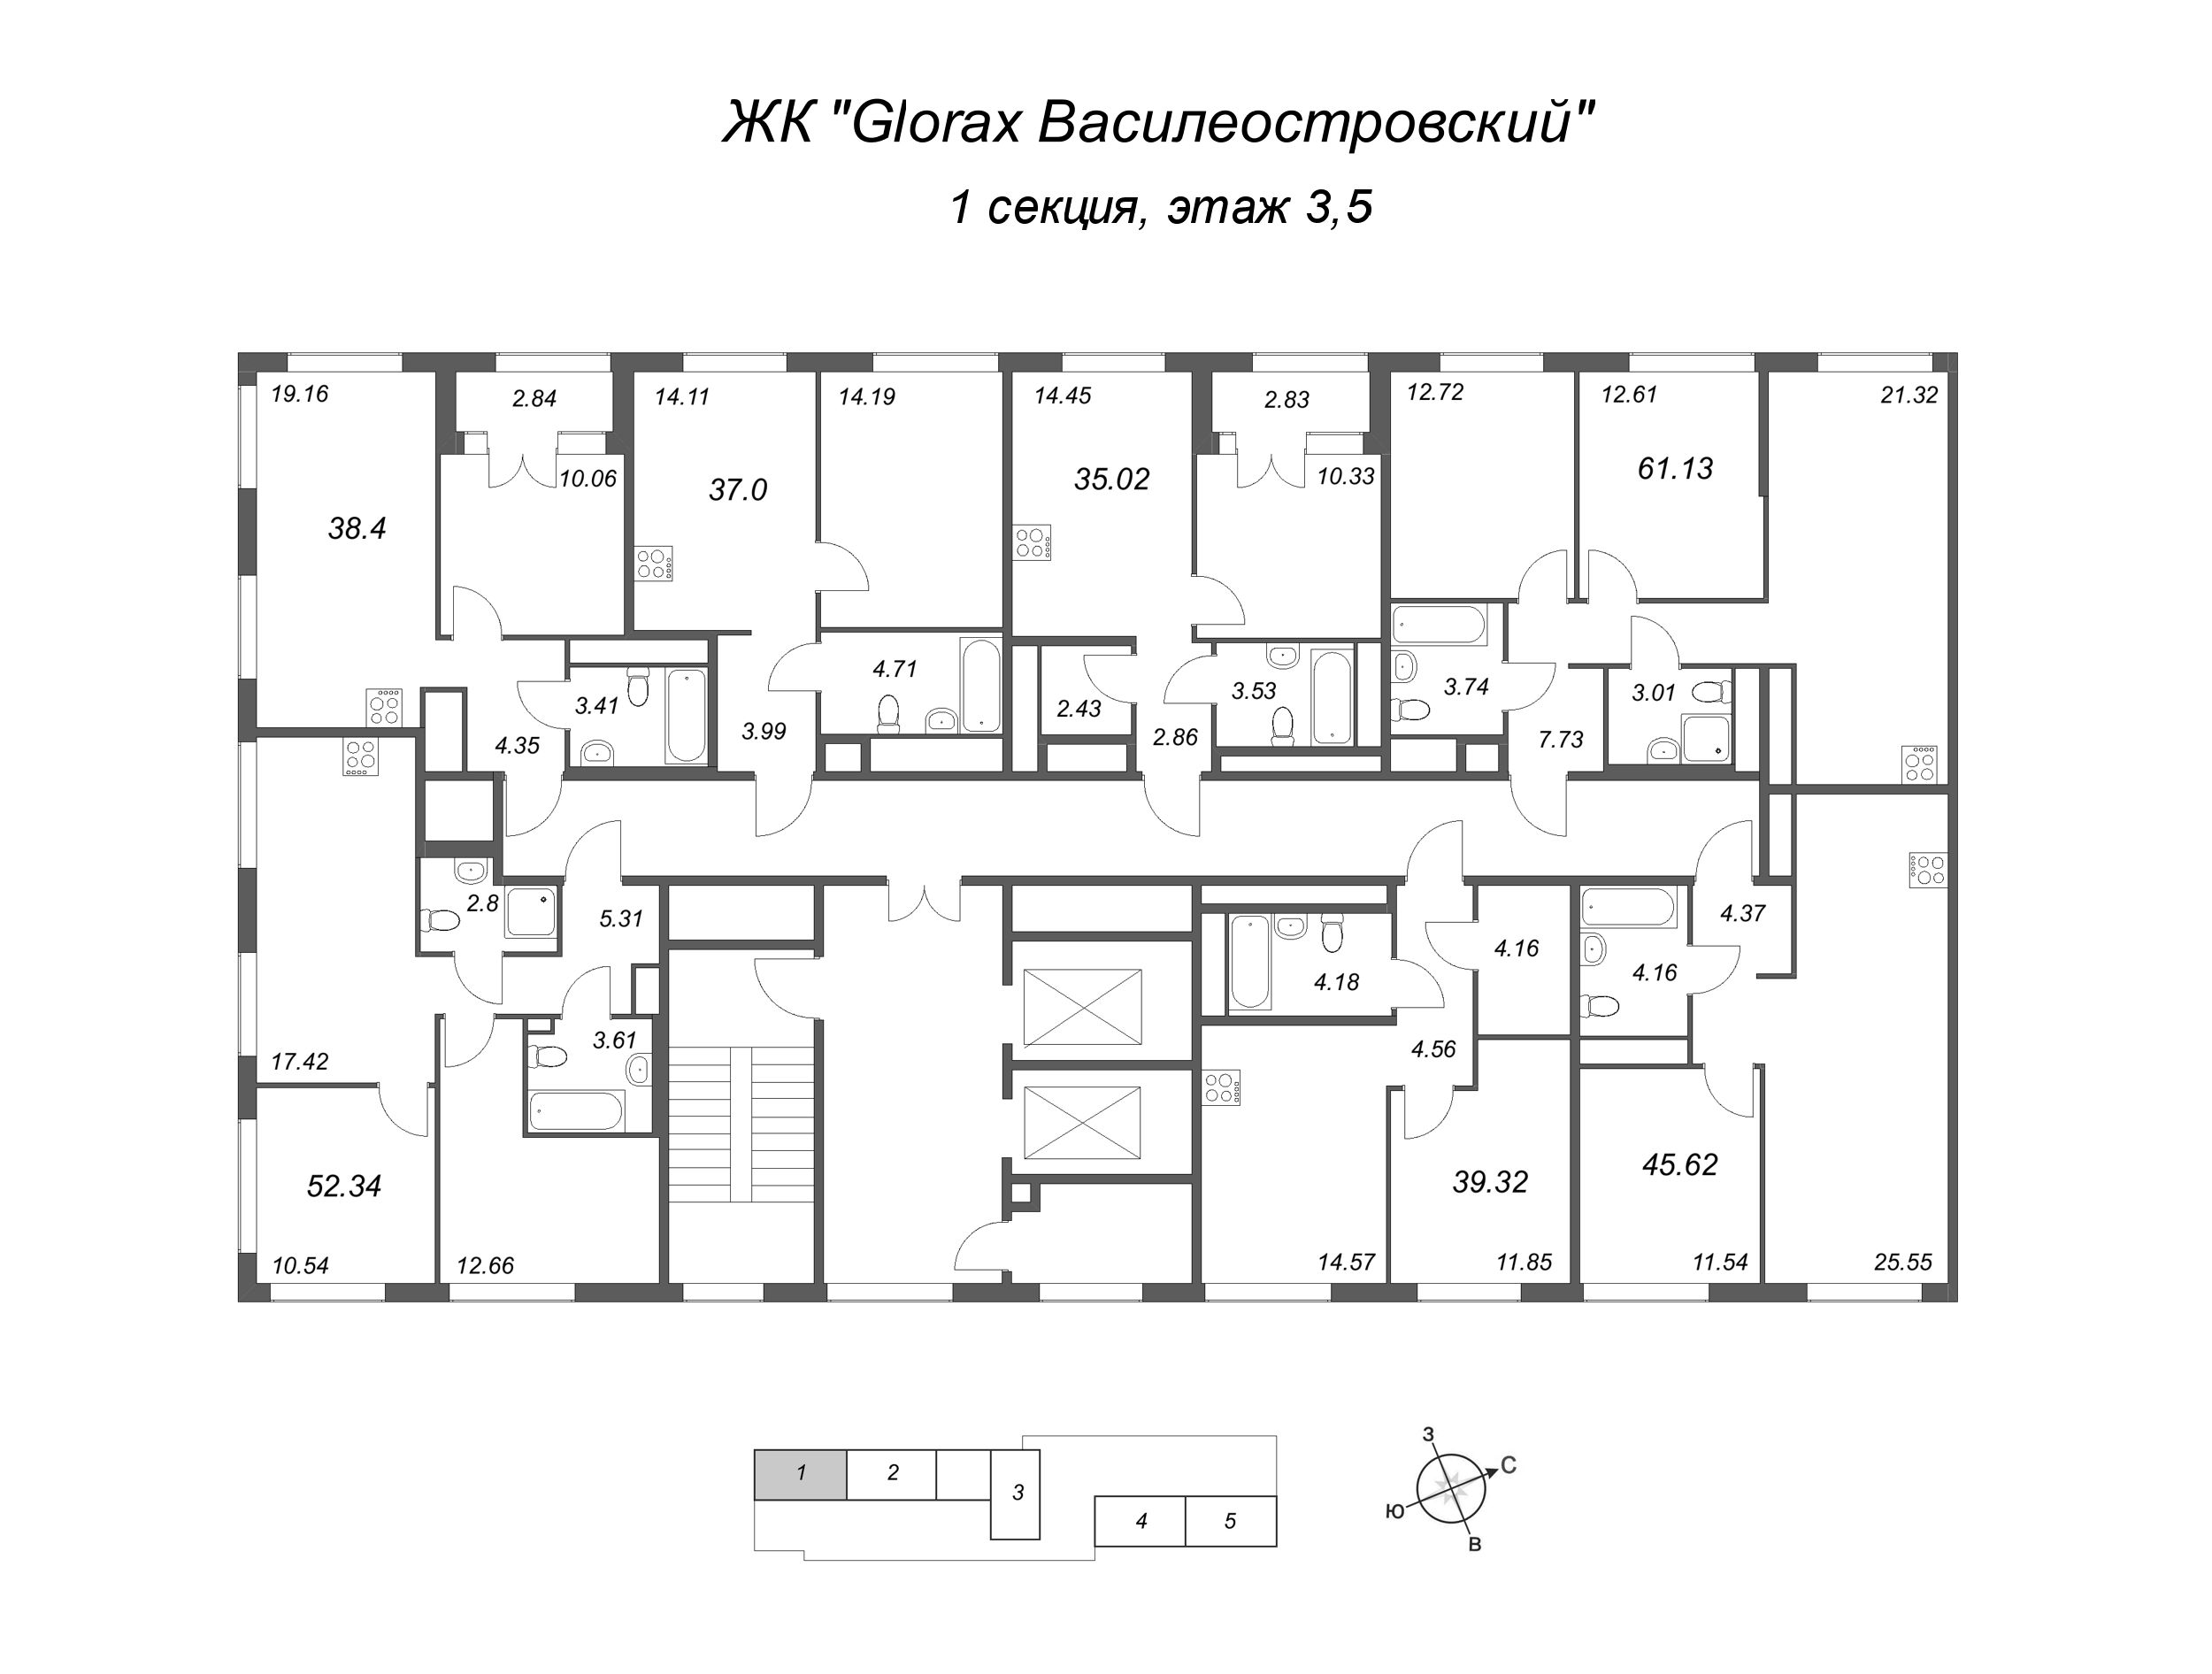 2-комнатная (Евро) квартира, 45.62 м² - планировка этажа